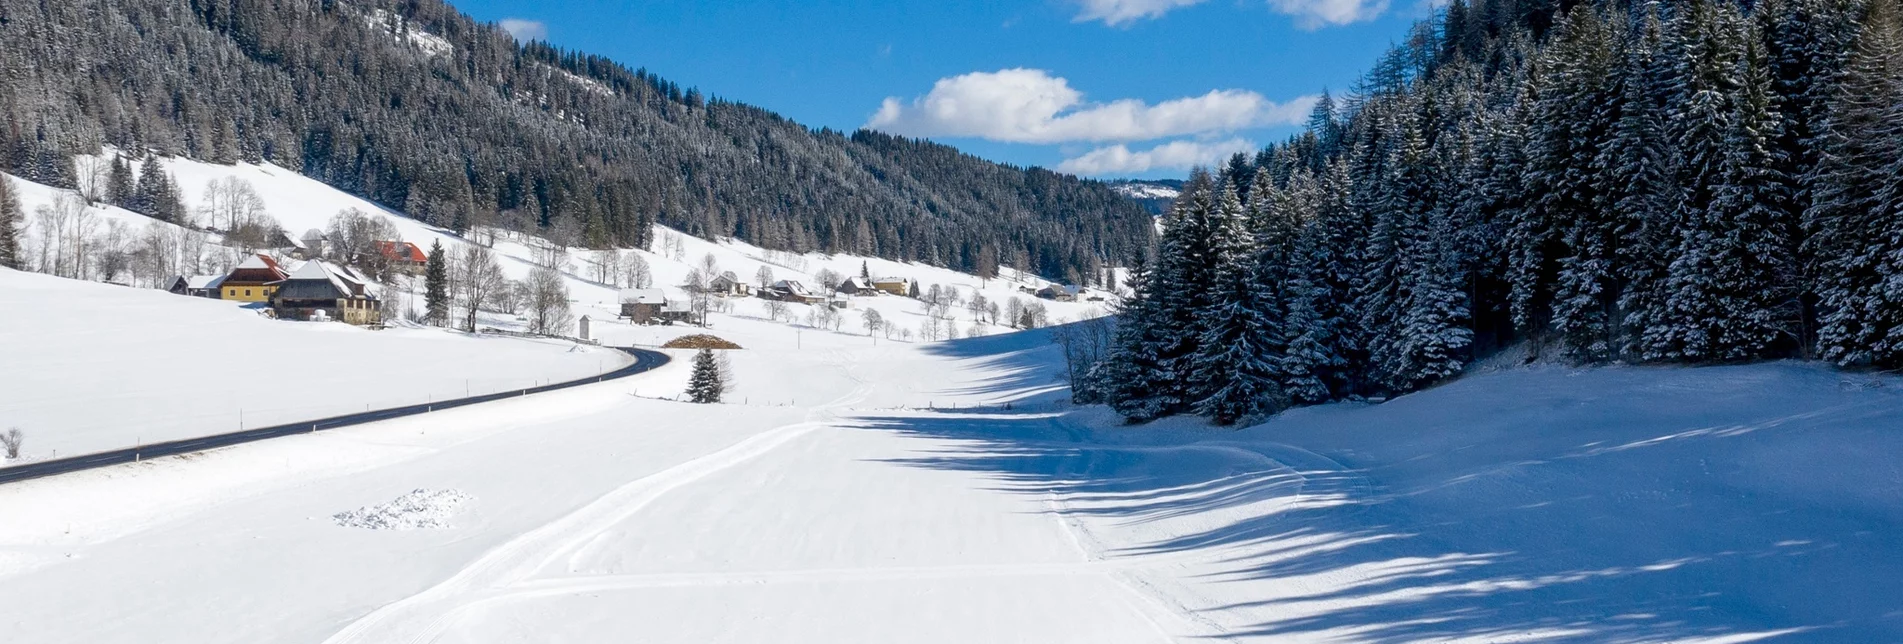 Cross-Country Skiing Weirerteich Loipe - Touren-Impression #1 | © Tourismusverband Region Murau